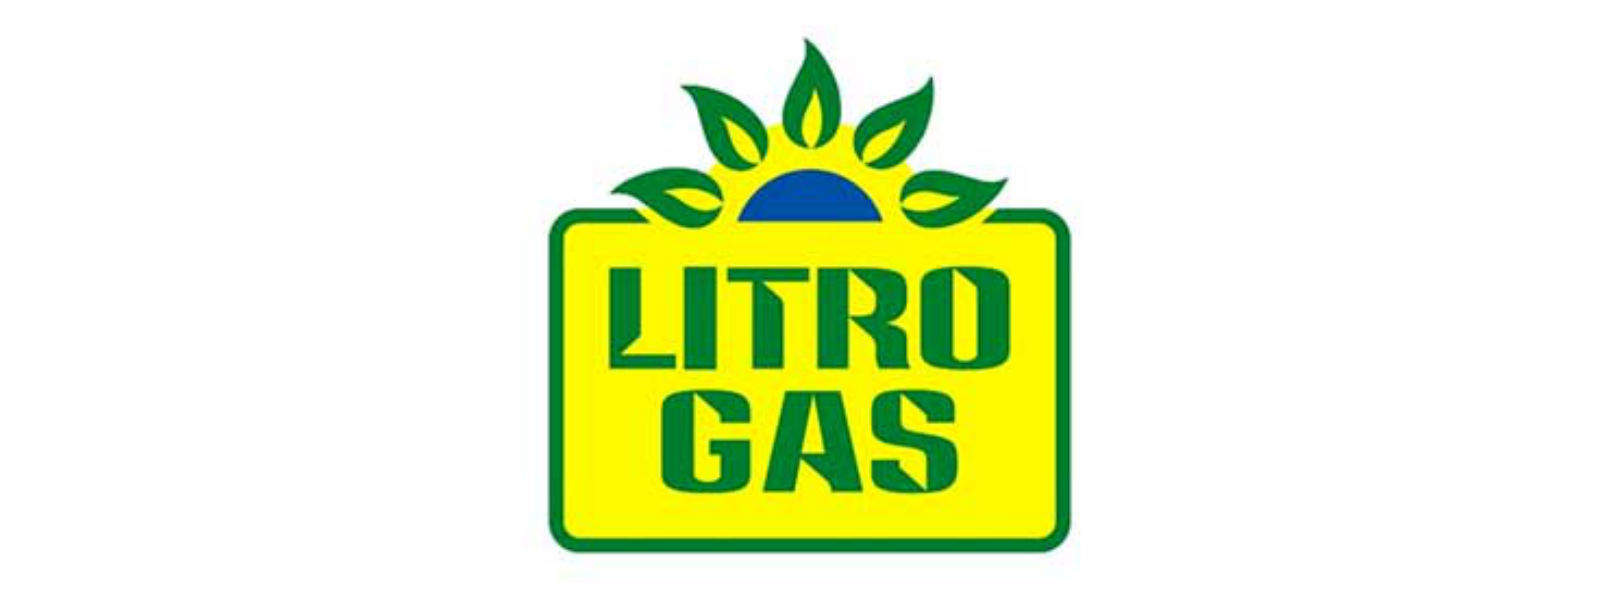 Litro Gas case: Neil Bandara released